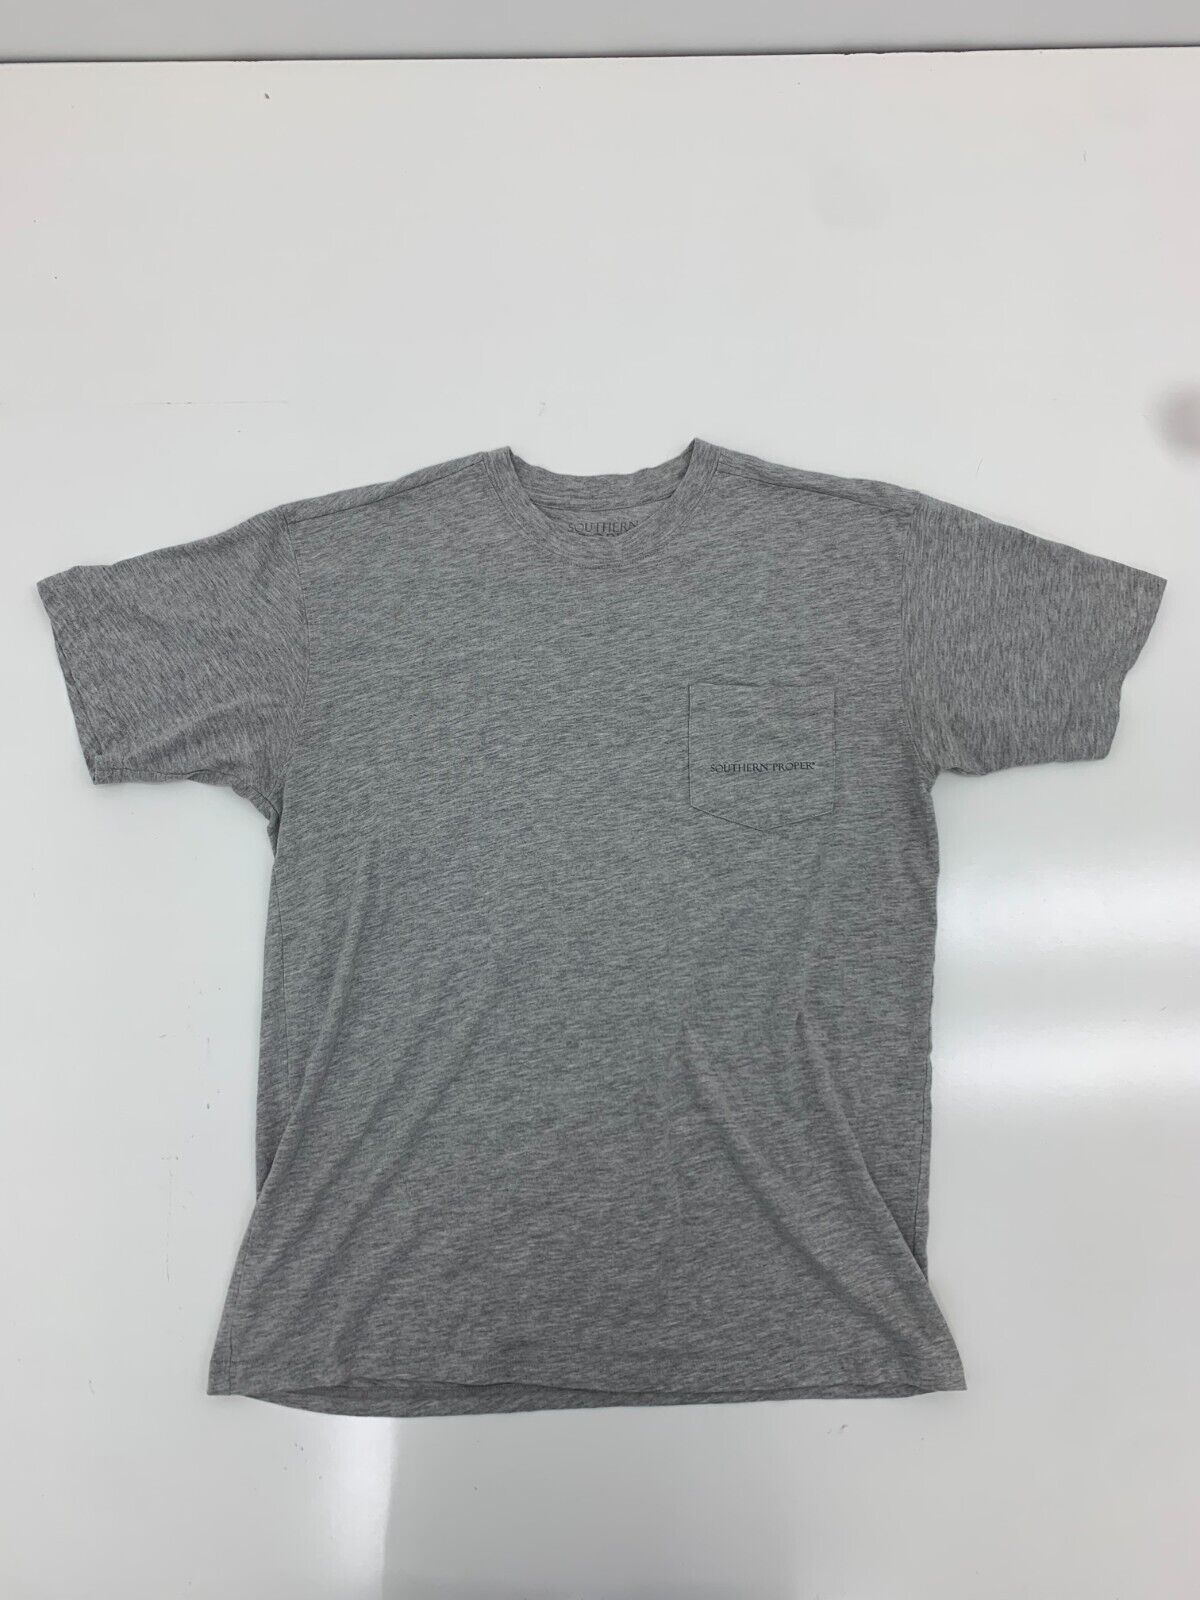 Southern Proper Mens Grey Back Graphic Short Sleeve Shirt Size Medium